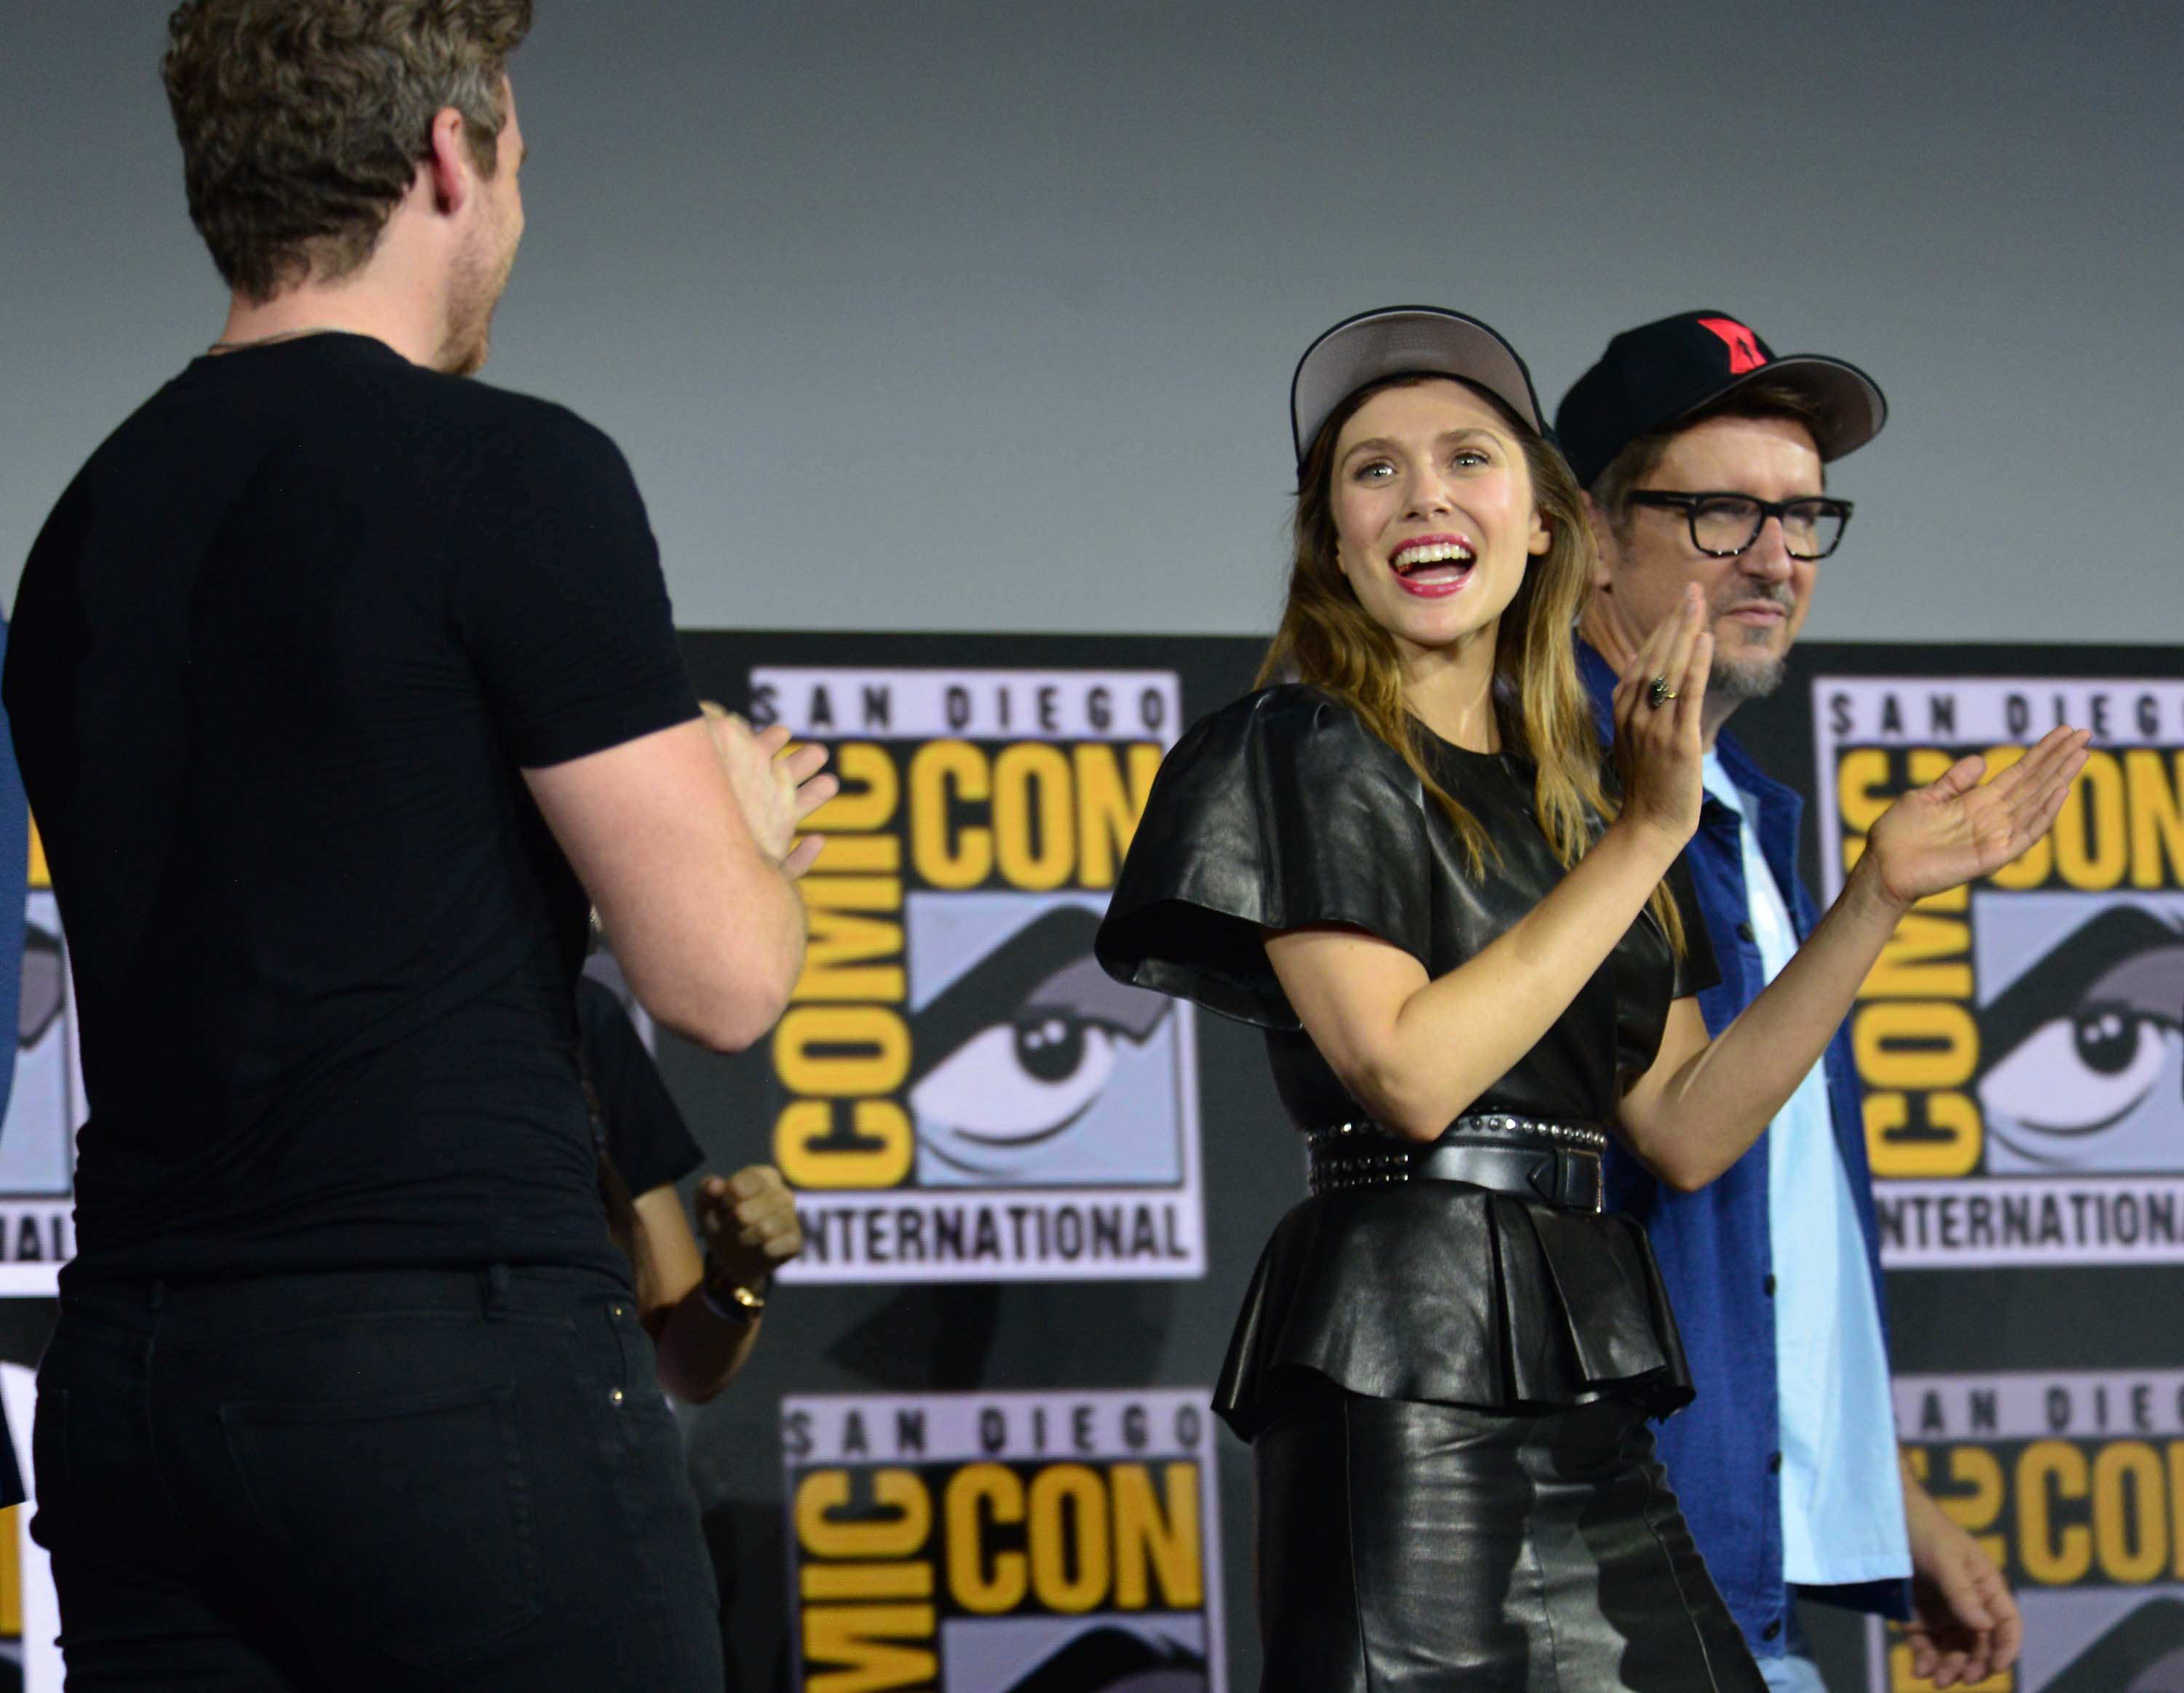 Elizabeth Olsen attends Marvel presentation at Comic Con